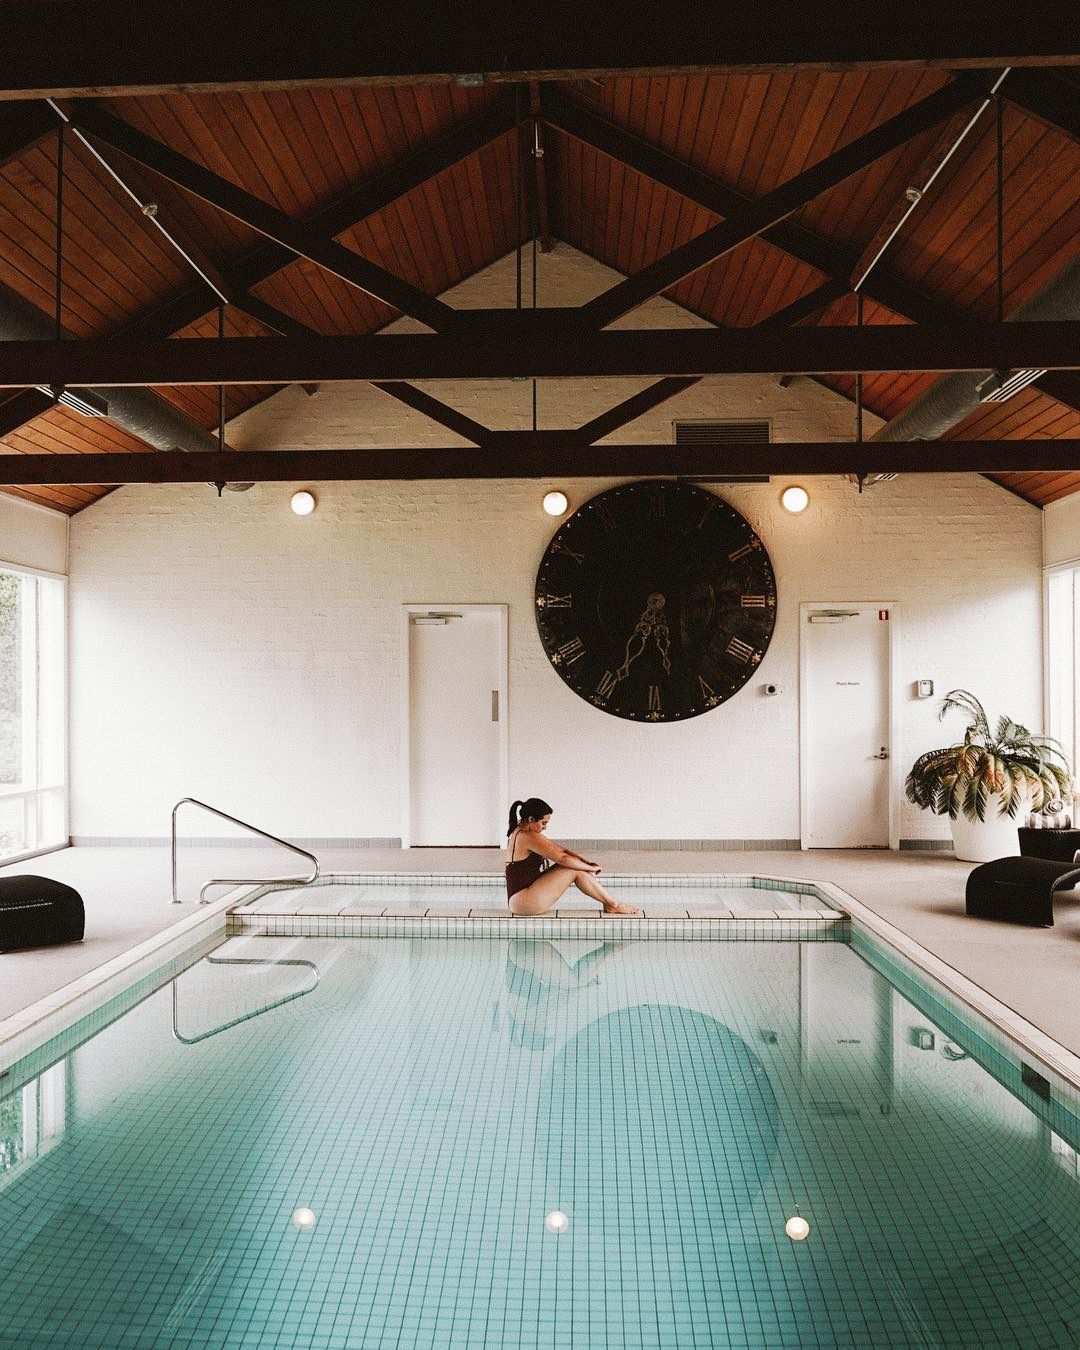 22 Striking Indoor Swimming Pool Designs - Stylish Indoor Pool Ideas